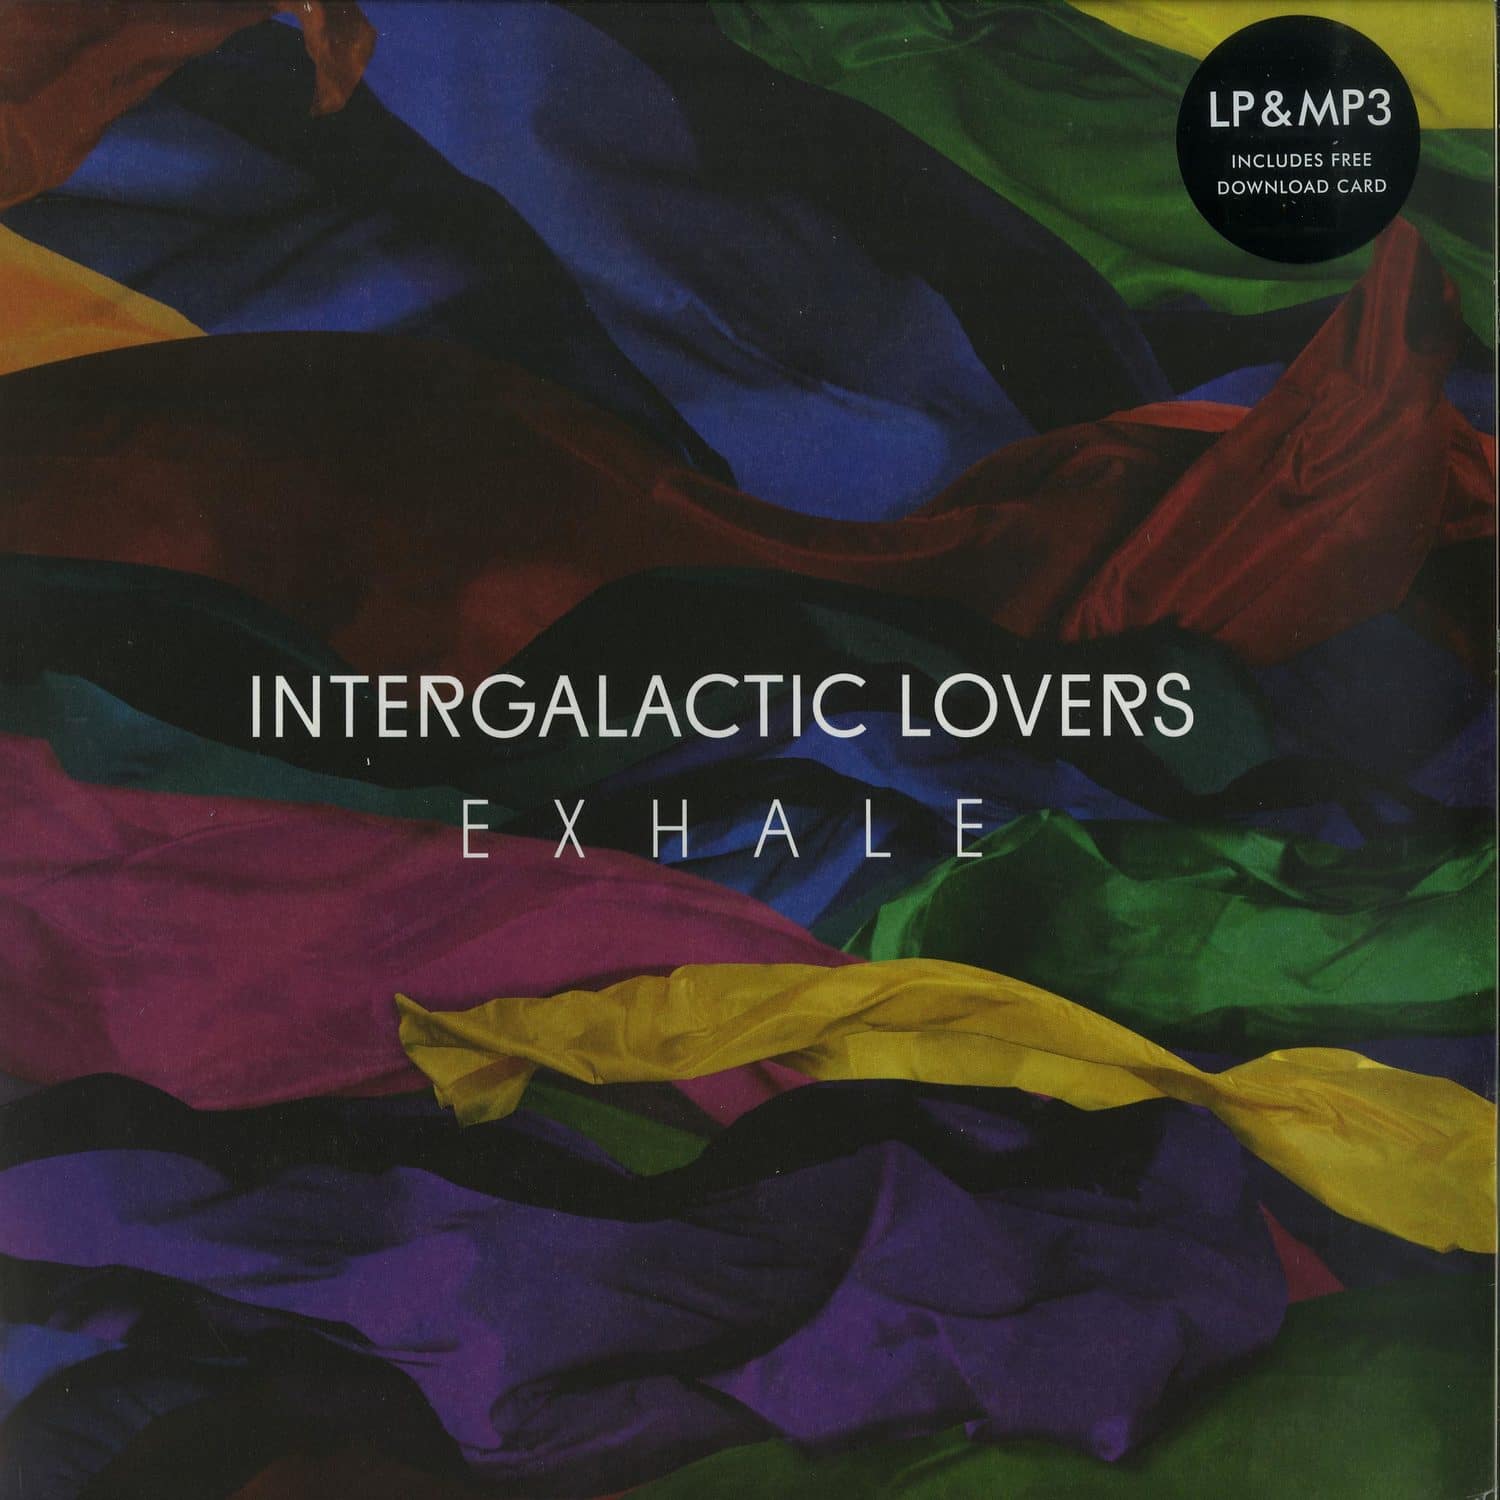 Intergalactic Lovers - EXHALE 